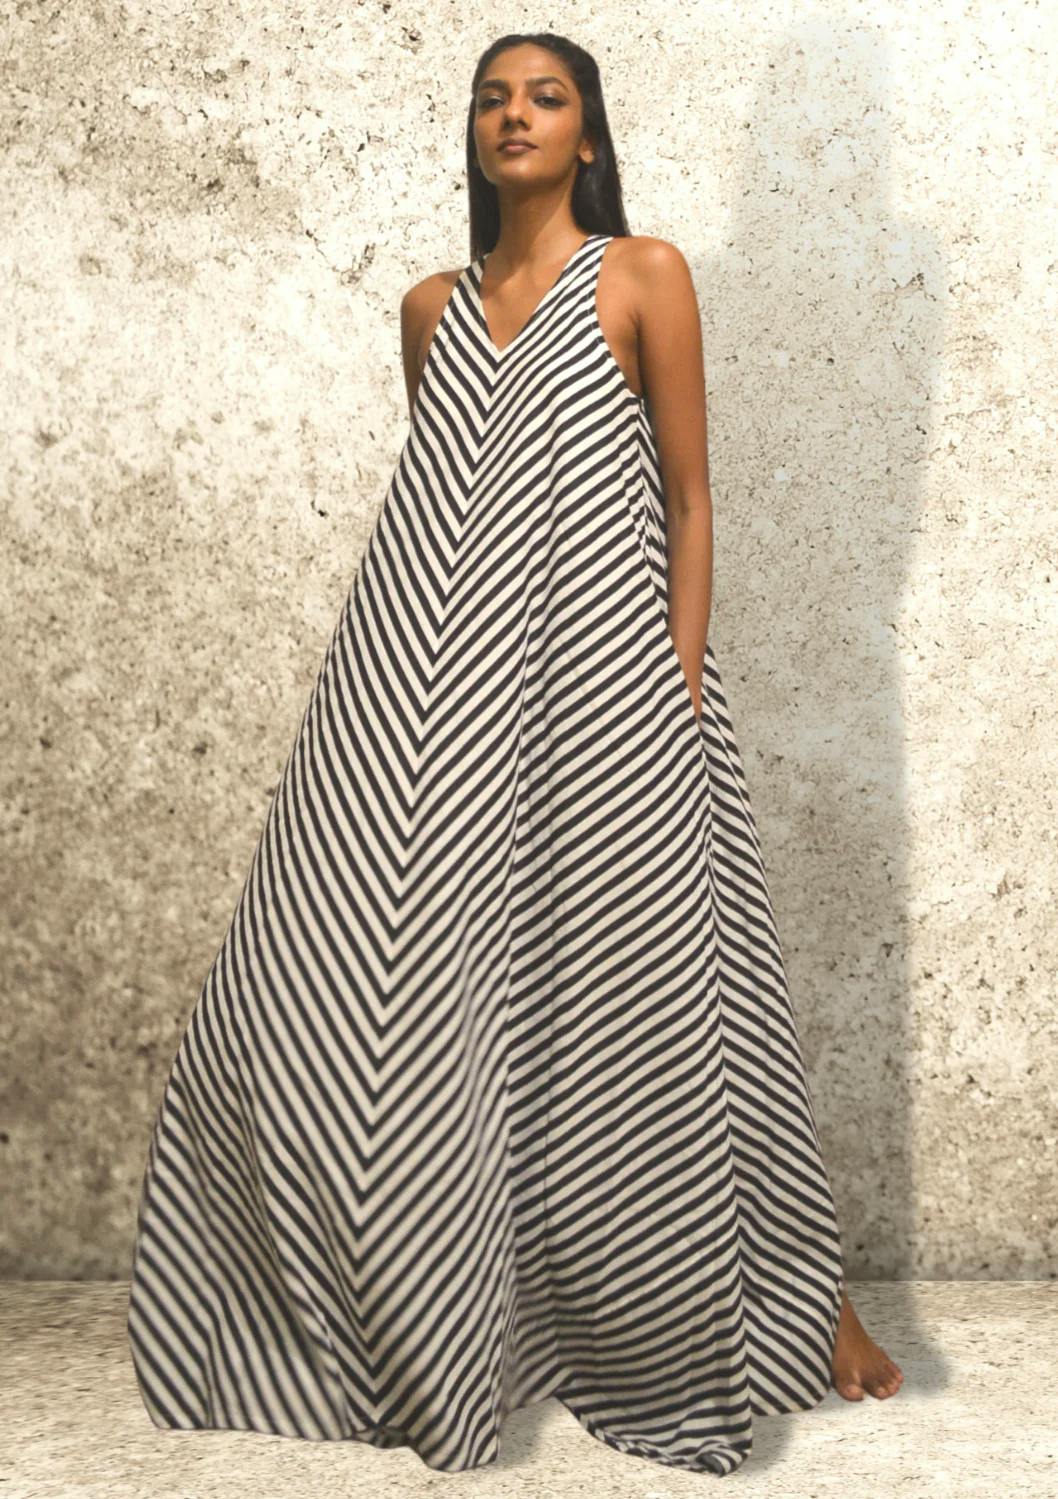 Sud de l'Inde Dress - BW Stripes, a product by Azurina